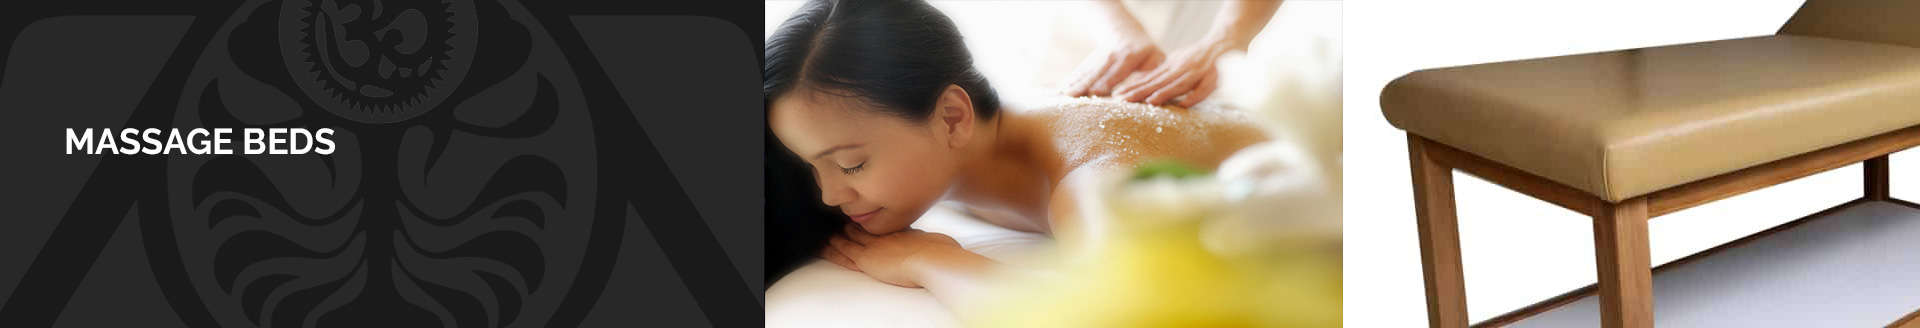 Massage-Beds-Catalogue-Manufacturers-wholesale-export-Bali-Java-Indonesia